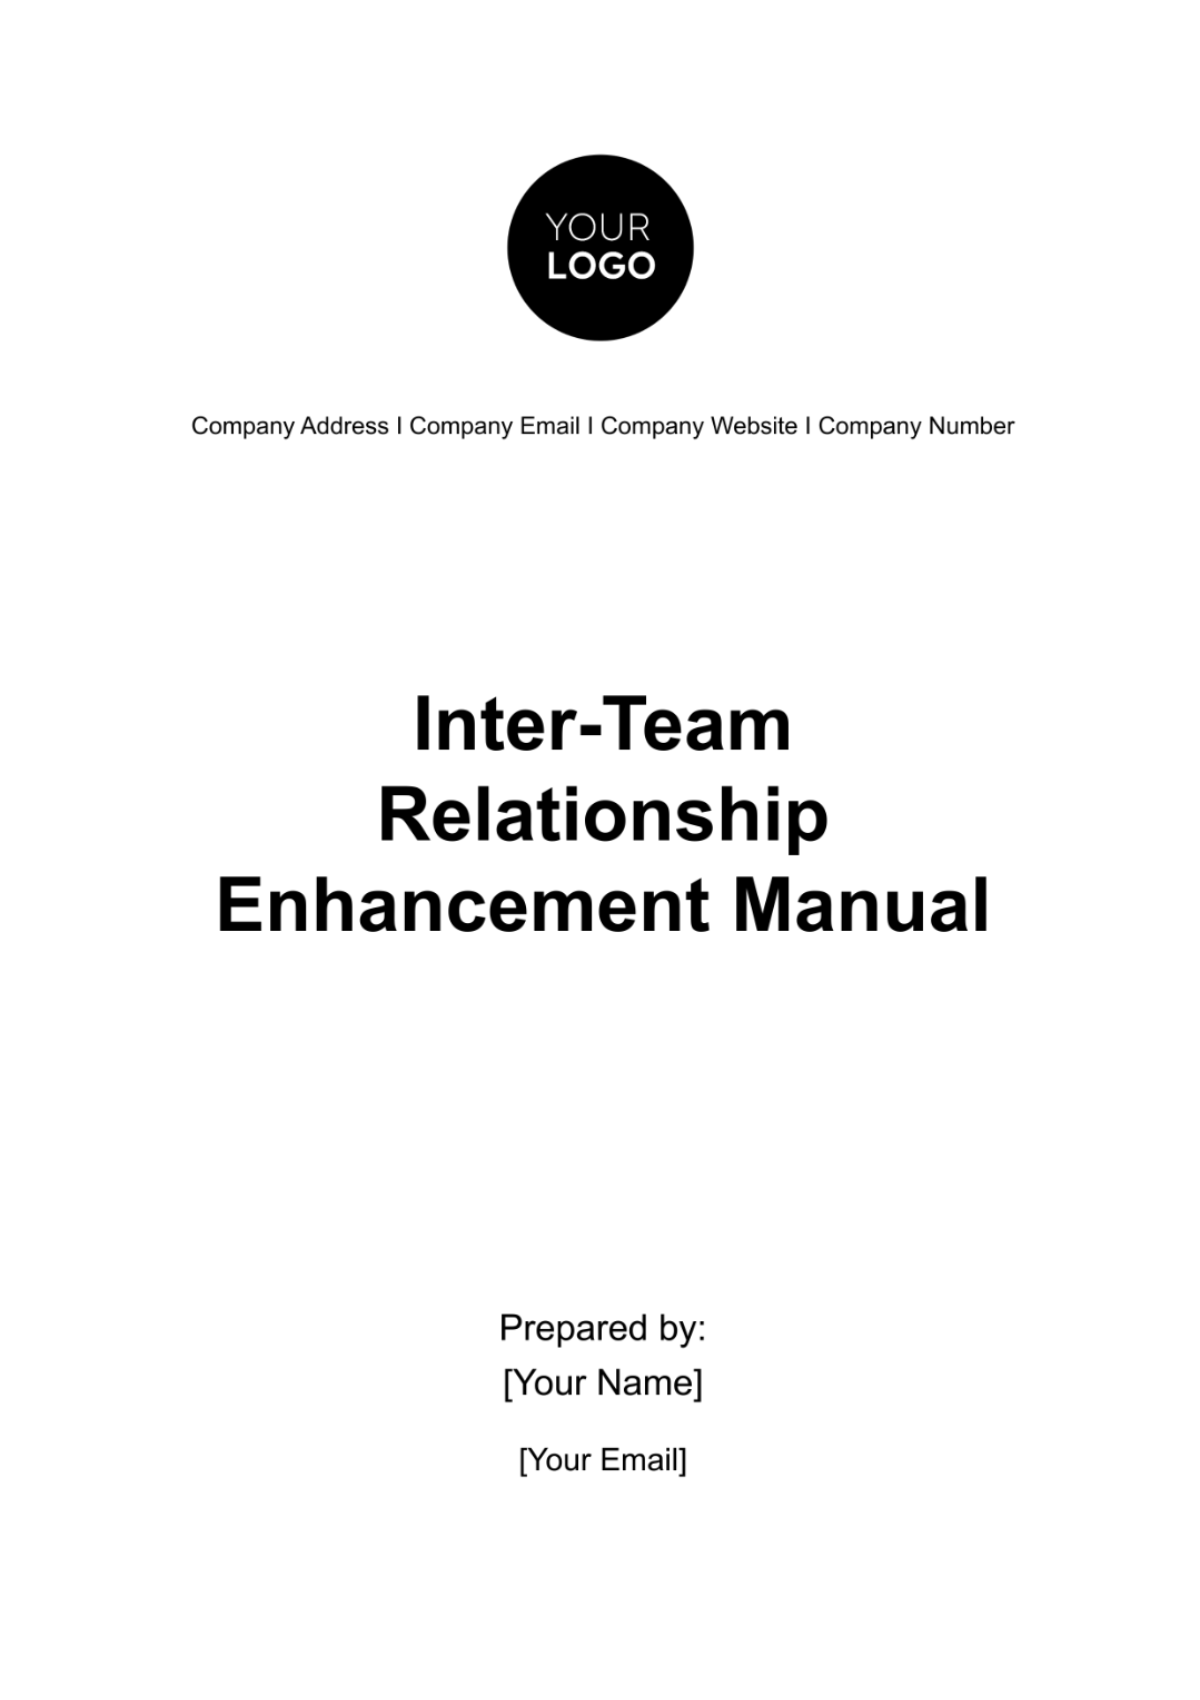 Free Inter-team Relationship Enhancement Manual HR Template